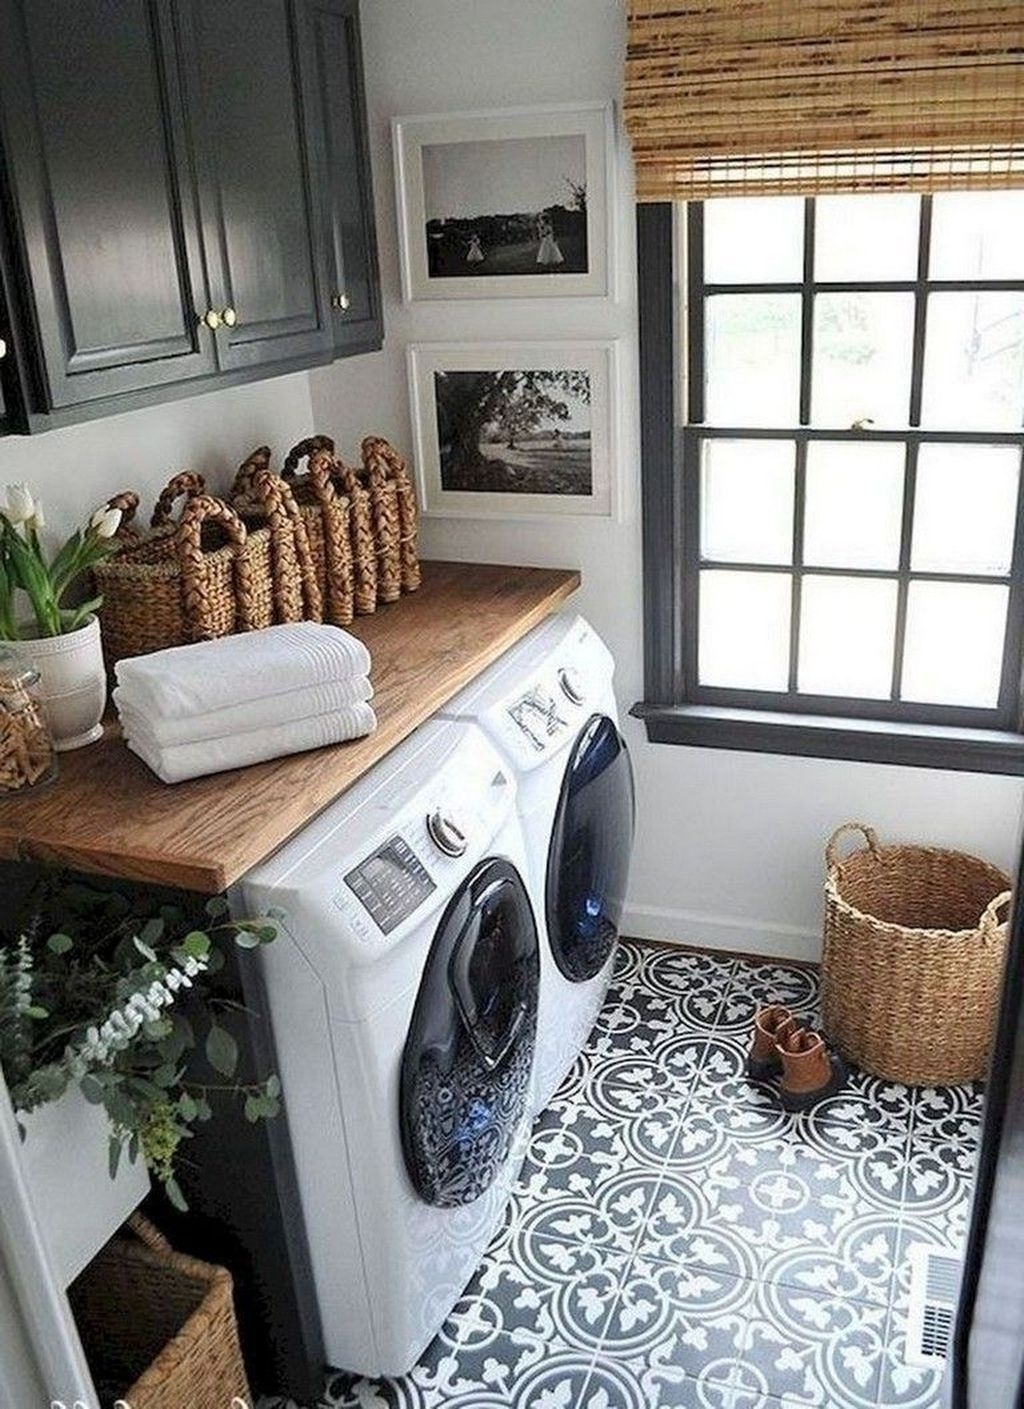 Stunning Small Laundry Room Design Ideas 32